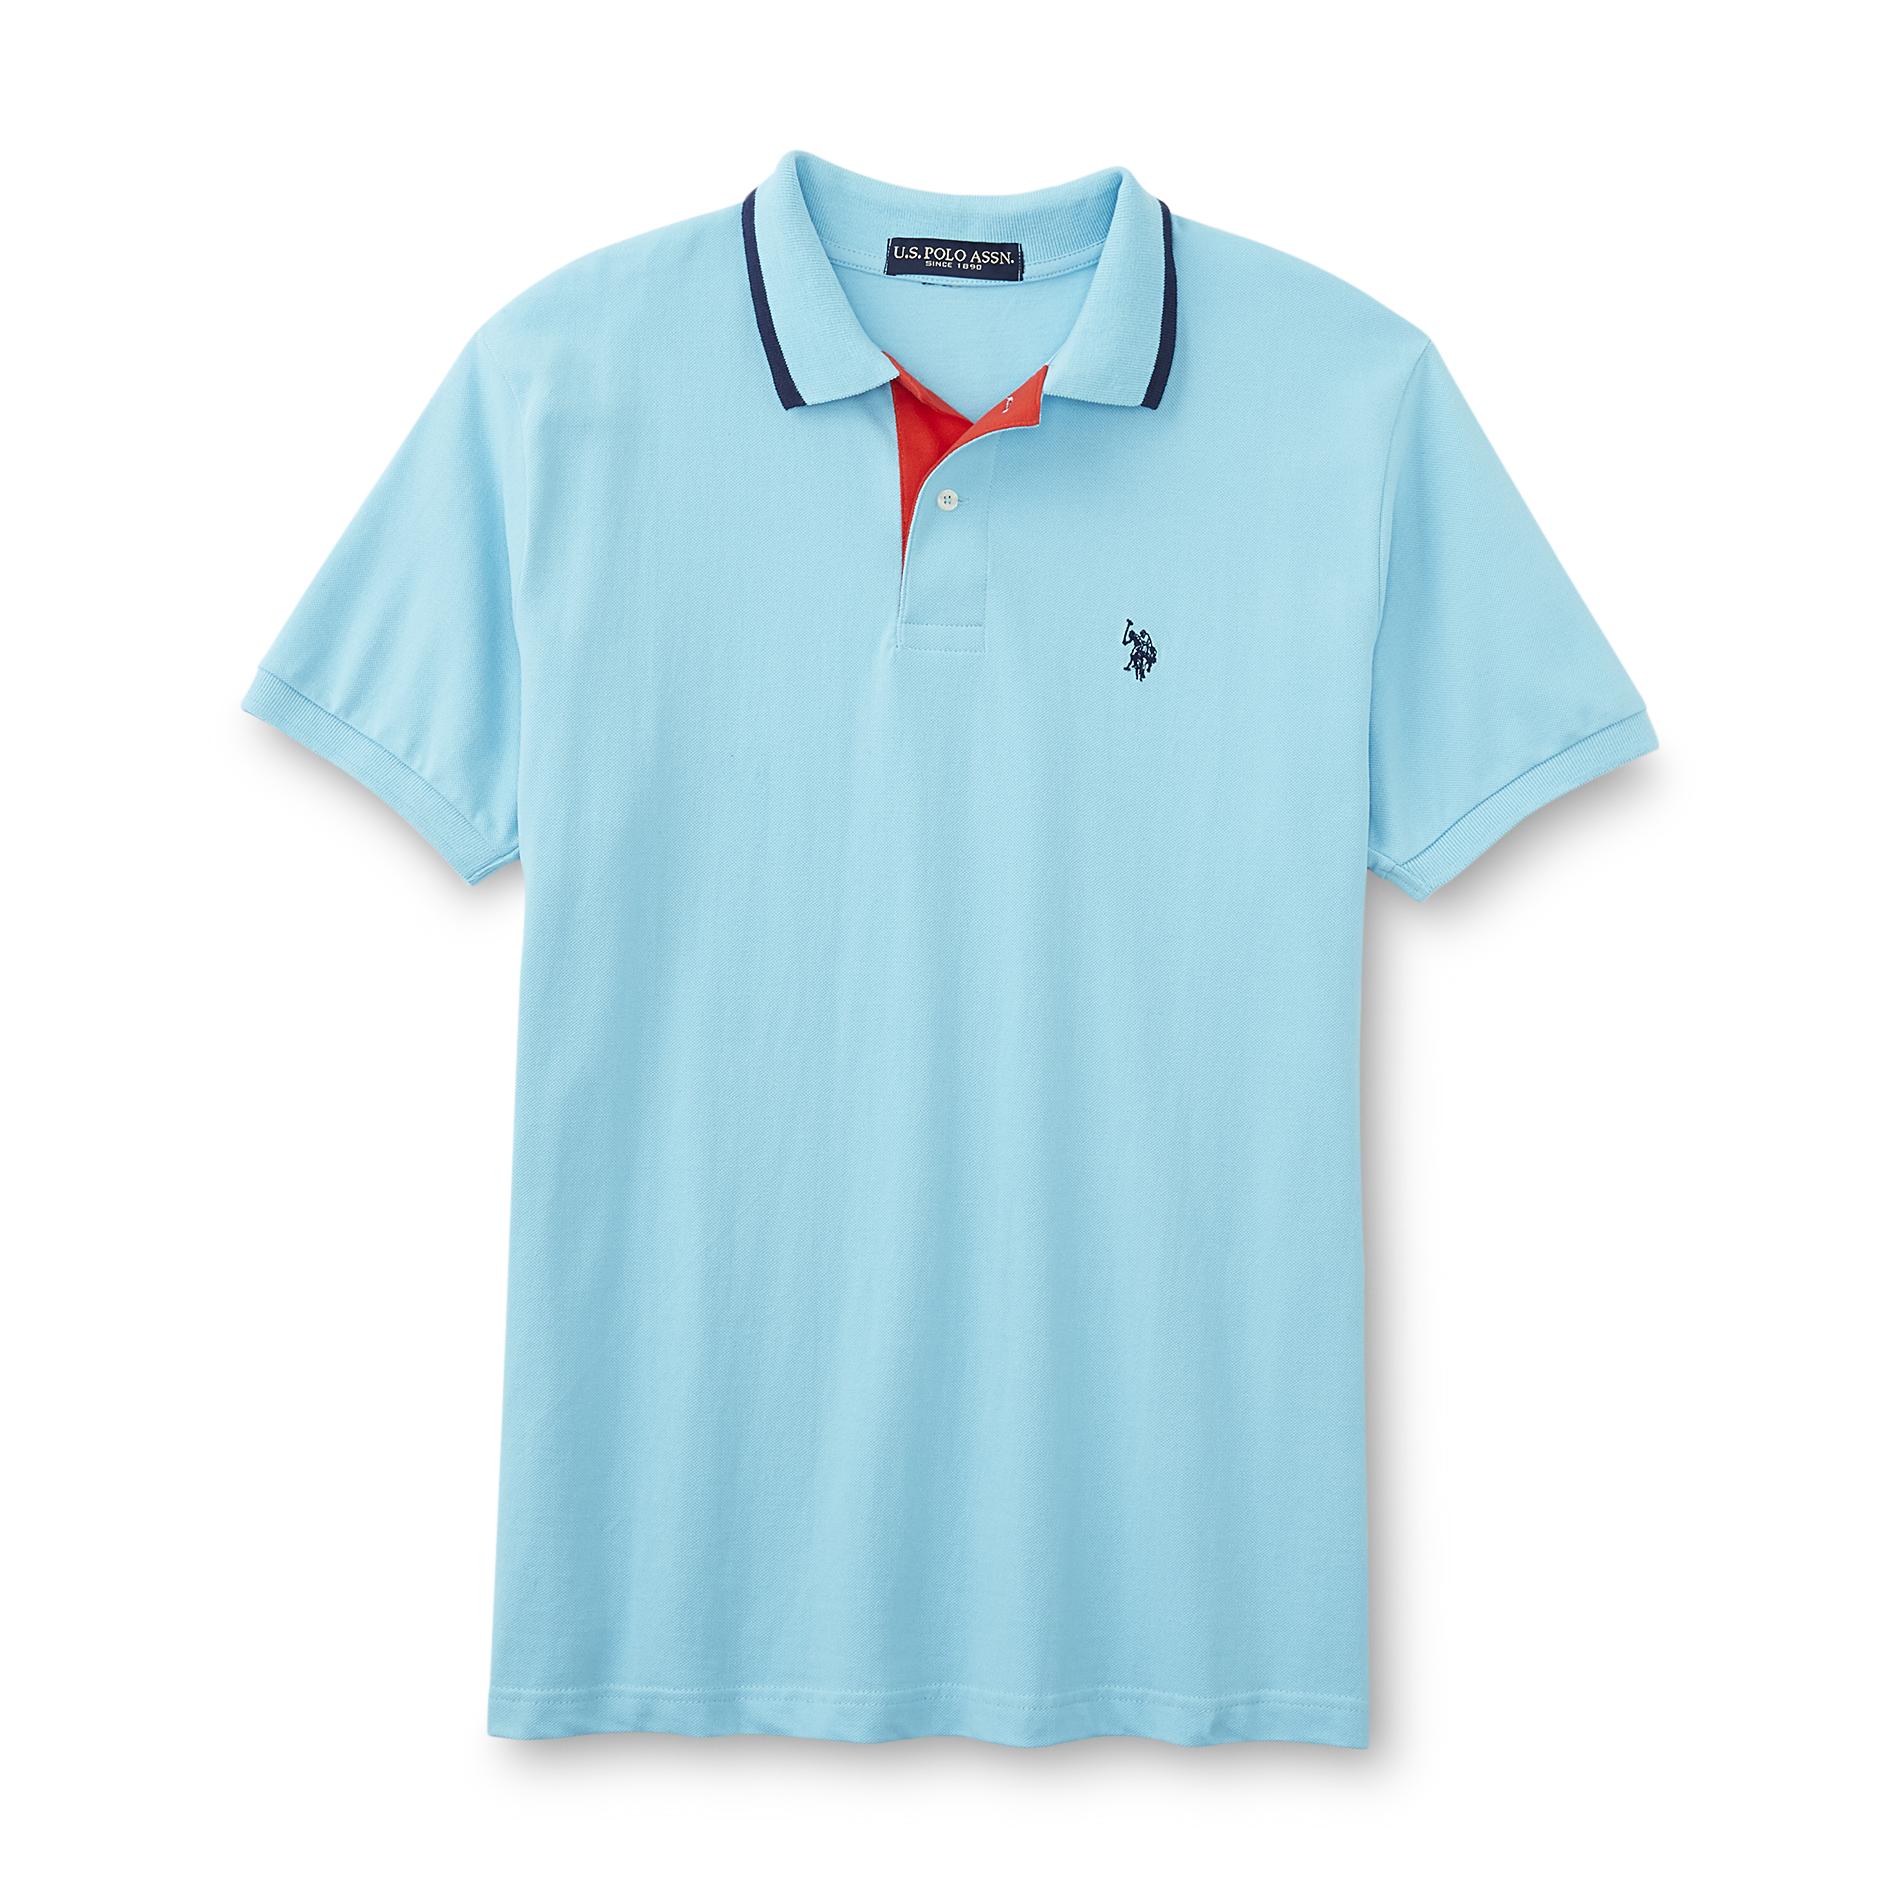 U.S. Polo Assn. Men's Modern Fit Polo Shirt